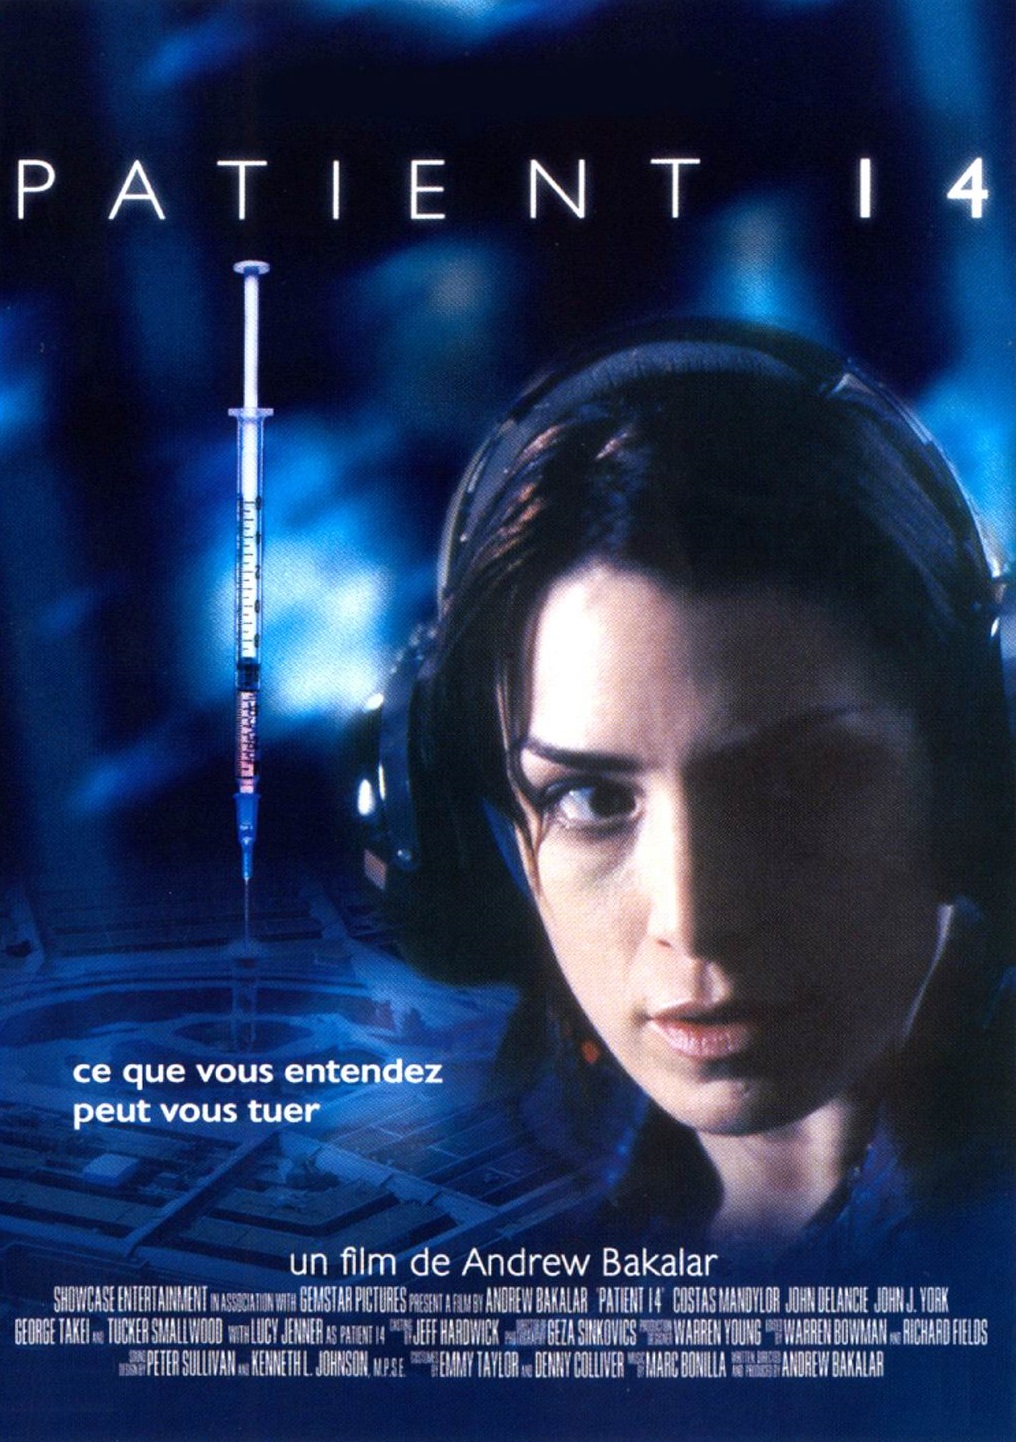 The Eavesdropper (2004) Screenshot 2 